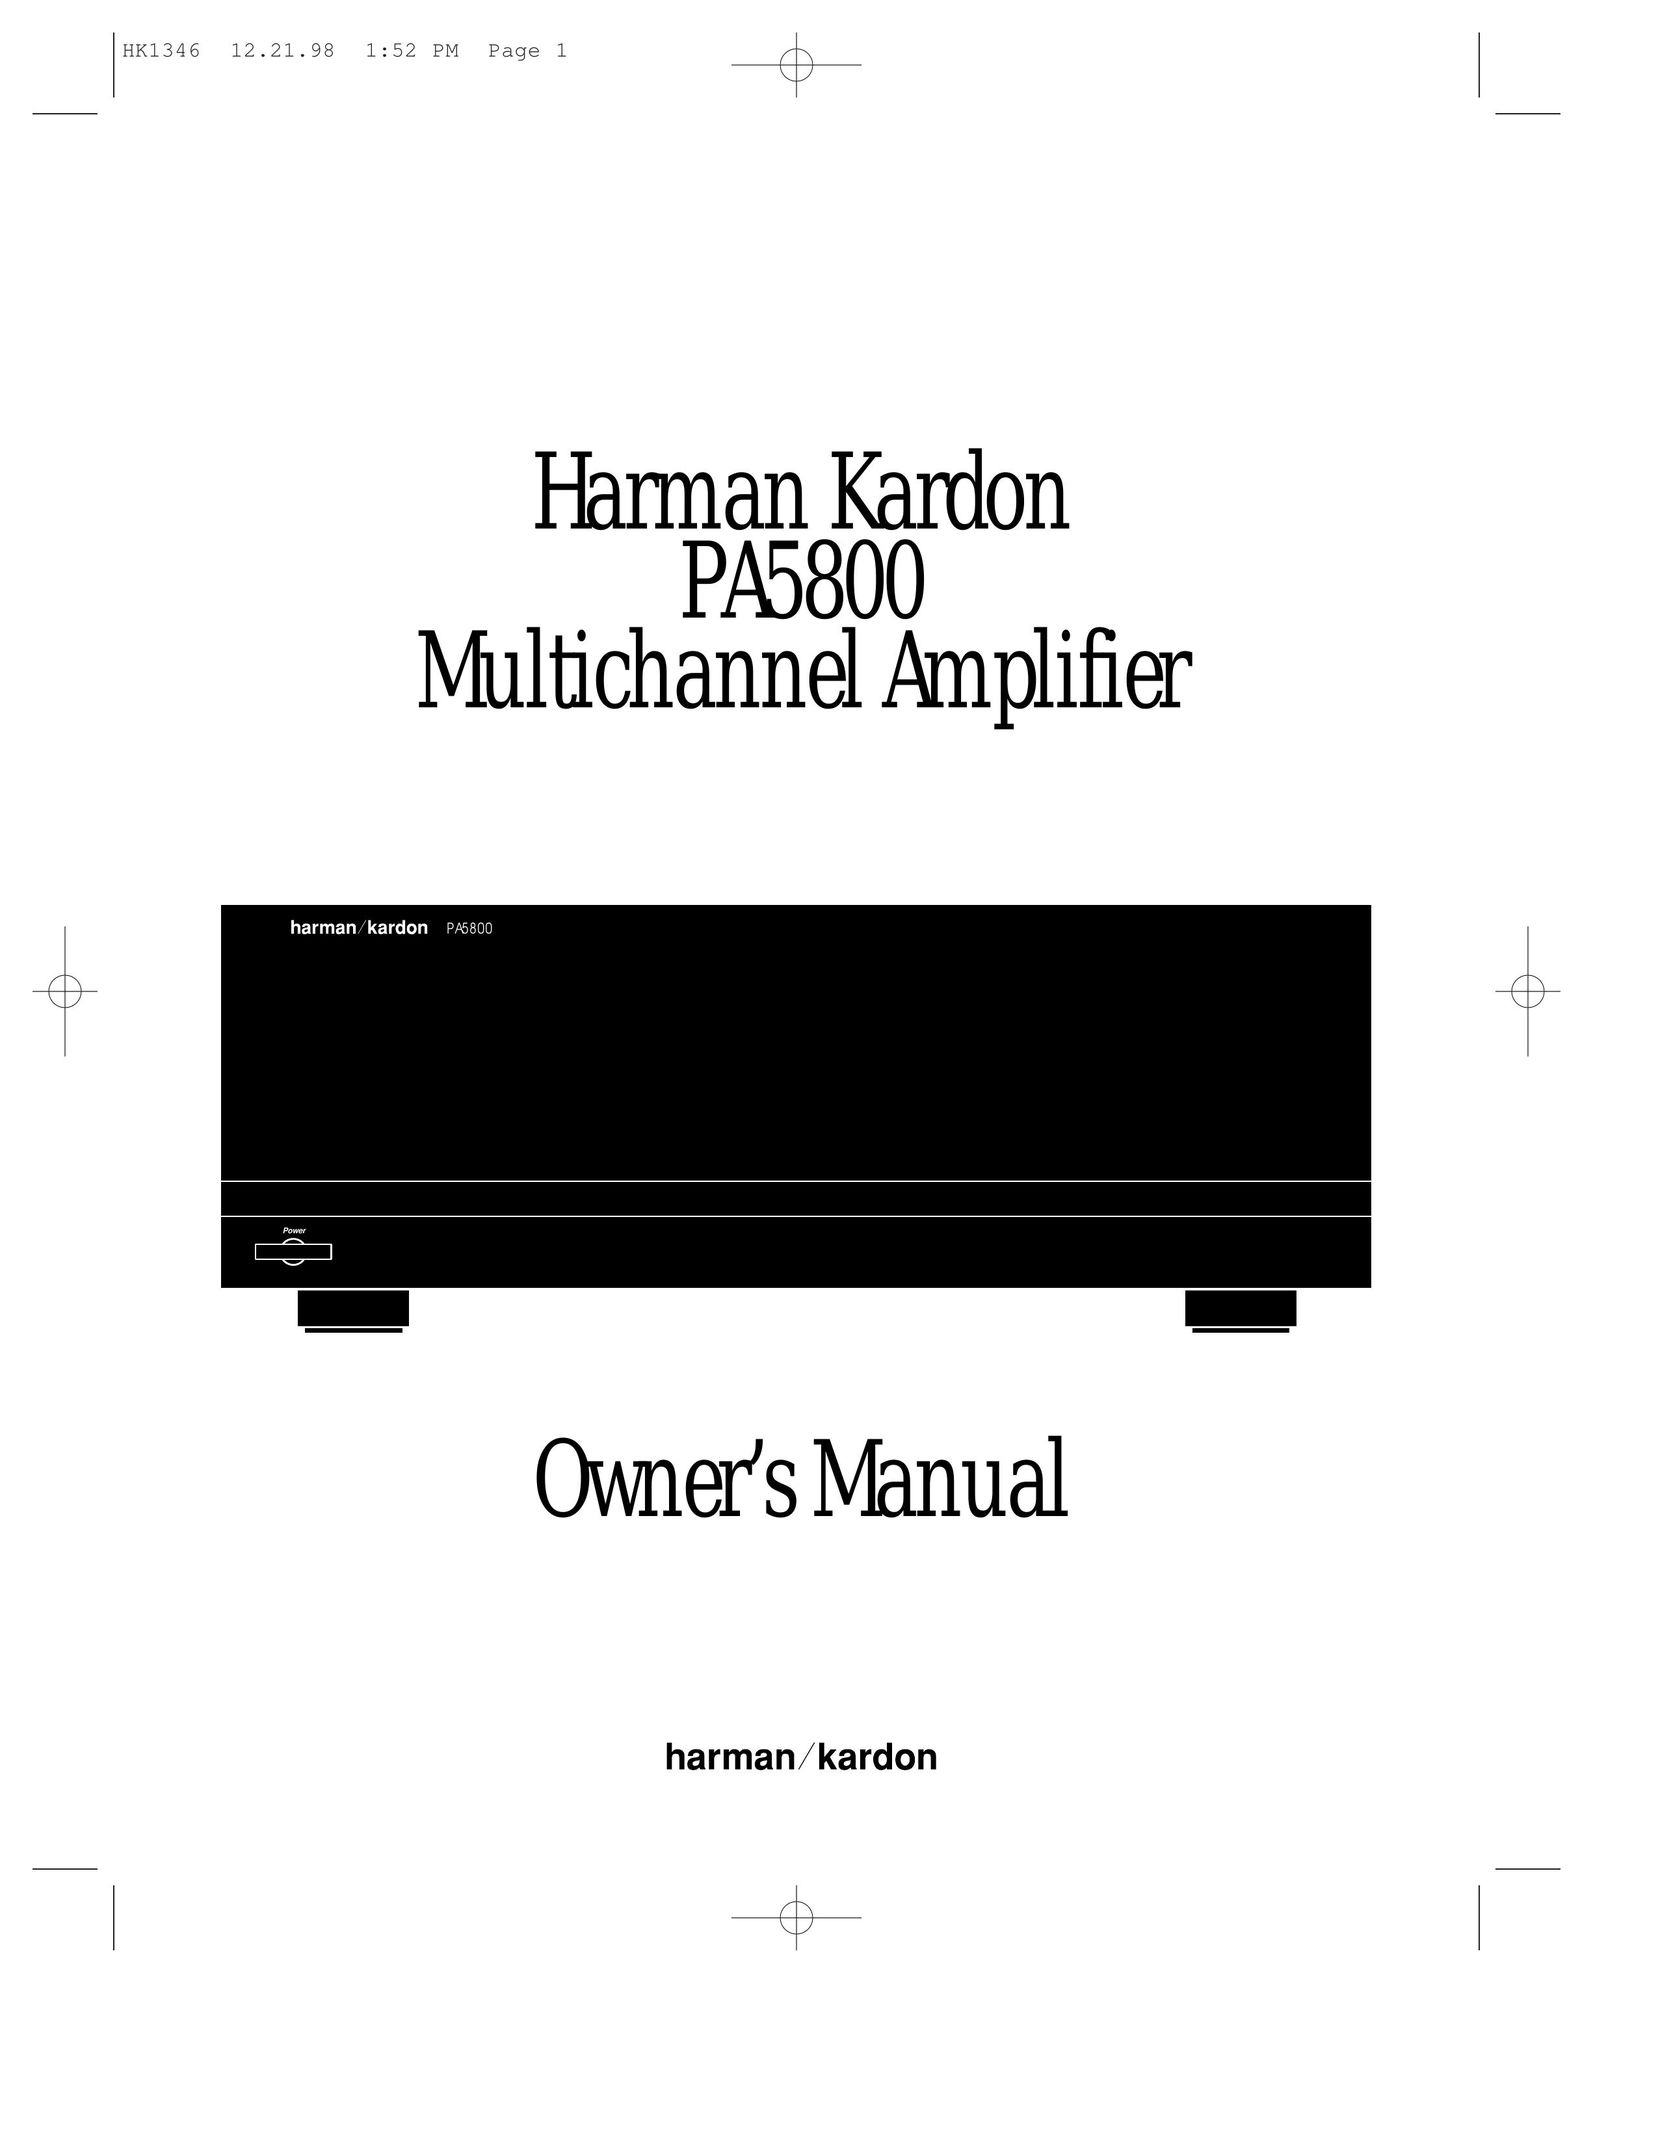 Harman-Kardon PA5800 Stereo Amplifier User Manual